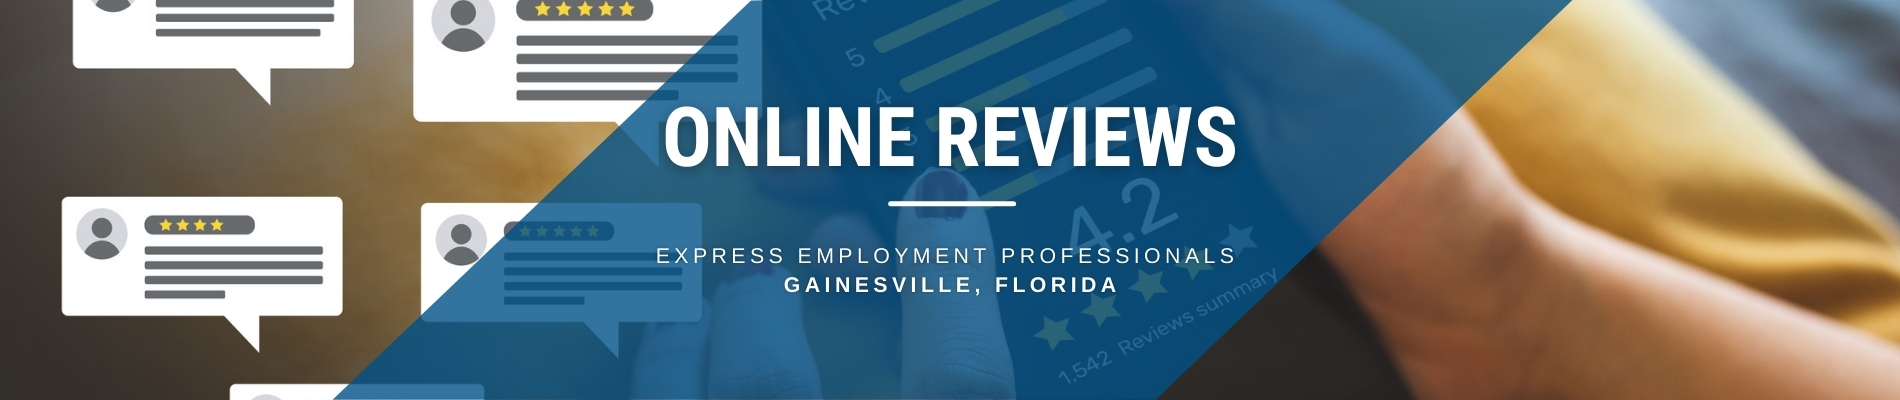 Gainesville, FL Recruitment Agency Online Reviews